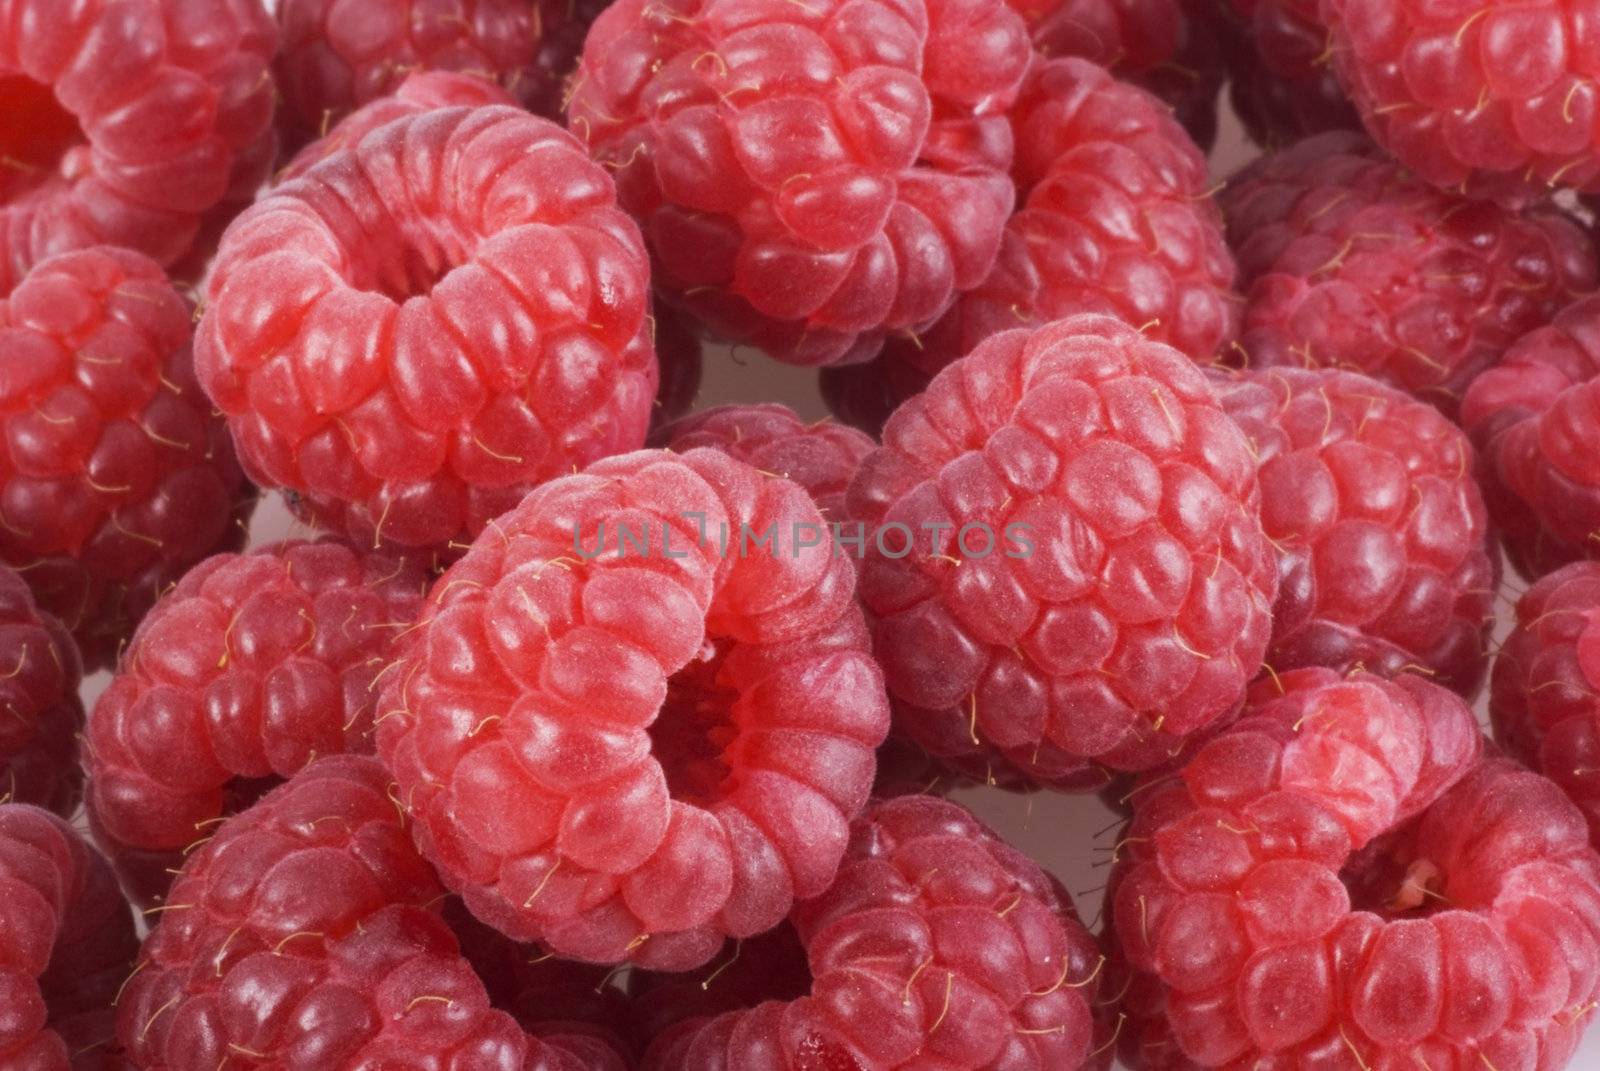 All raspberries. by SasPartout